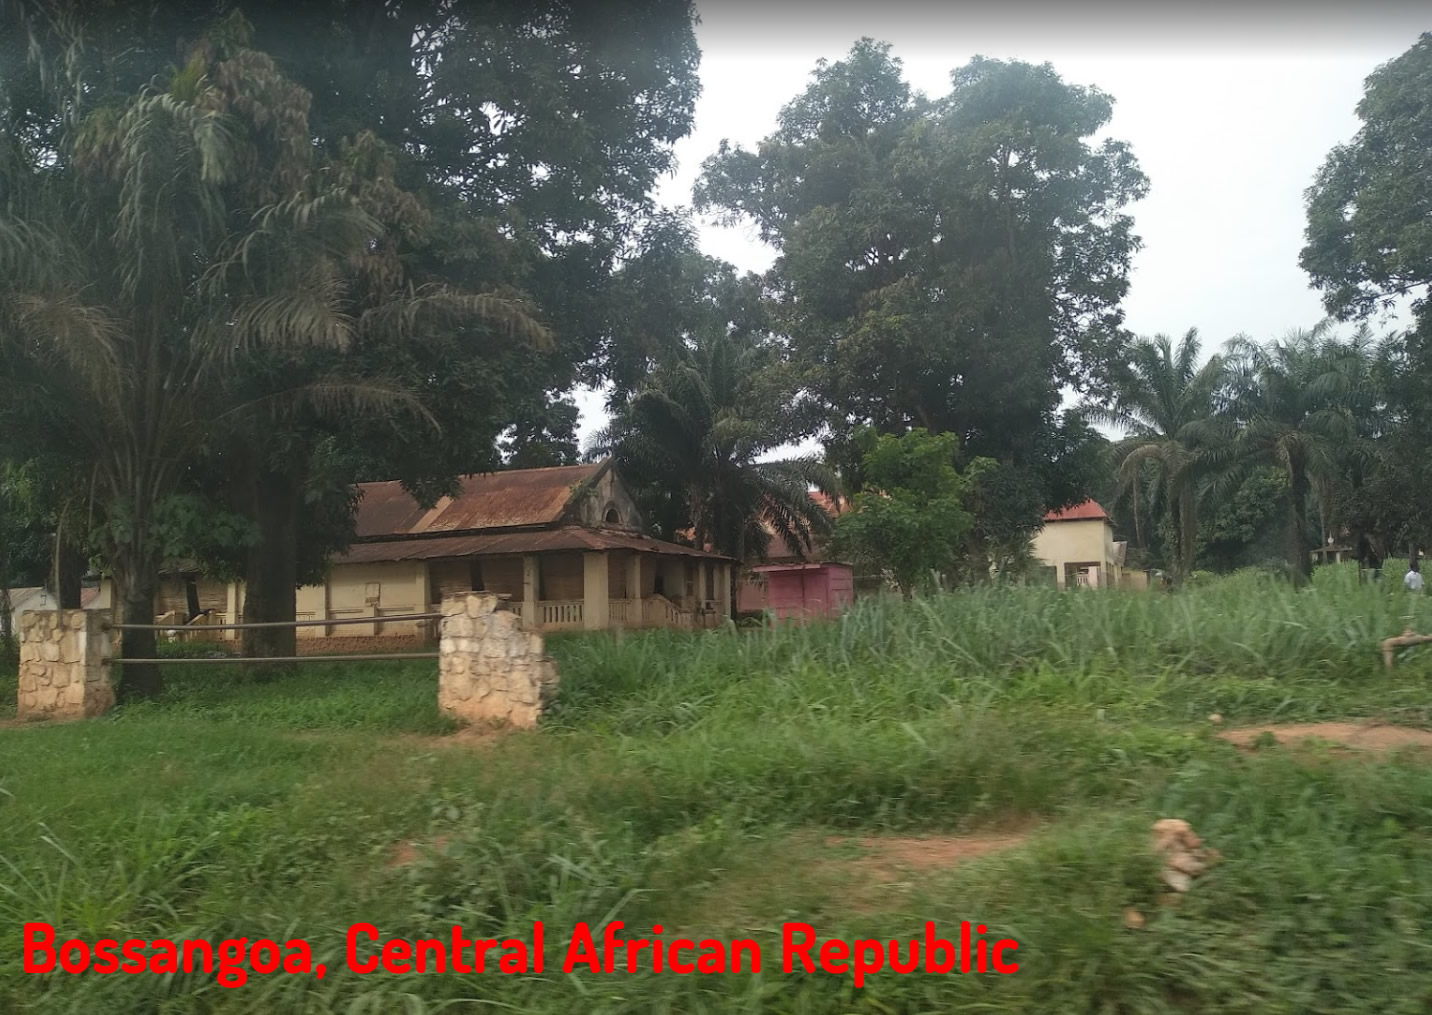 Bossangoa Central African Republic